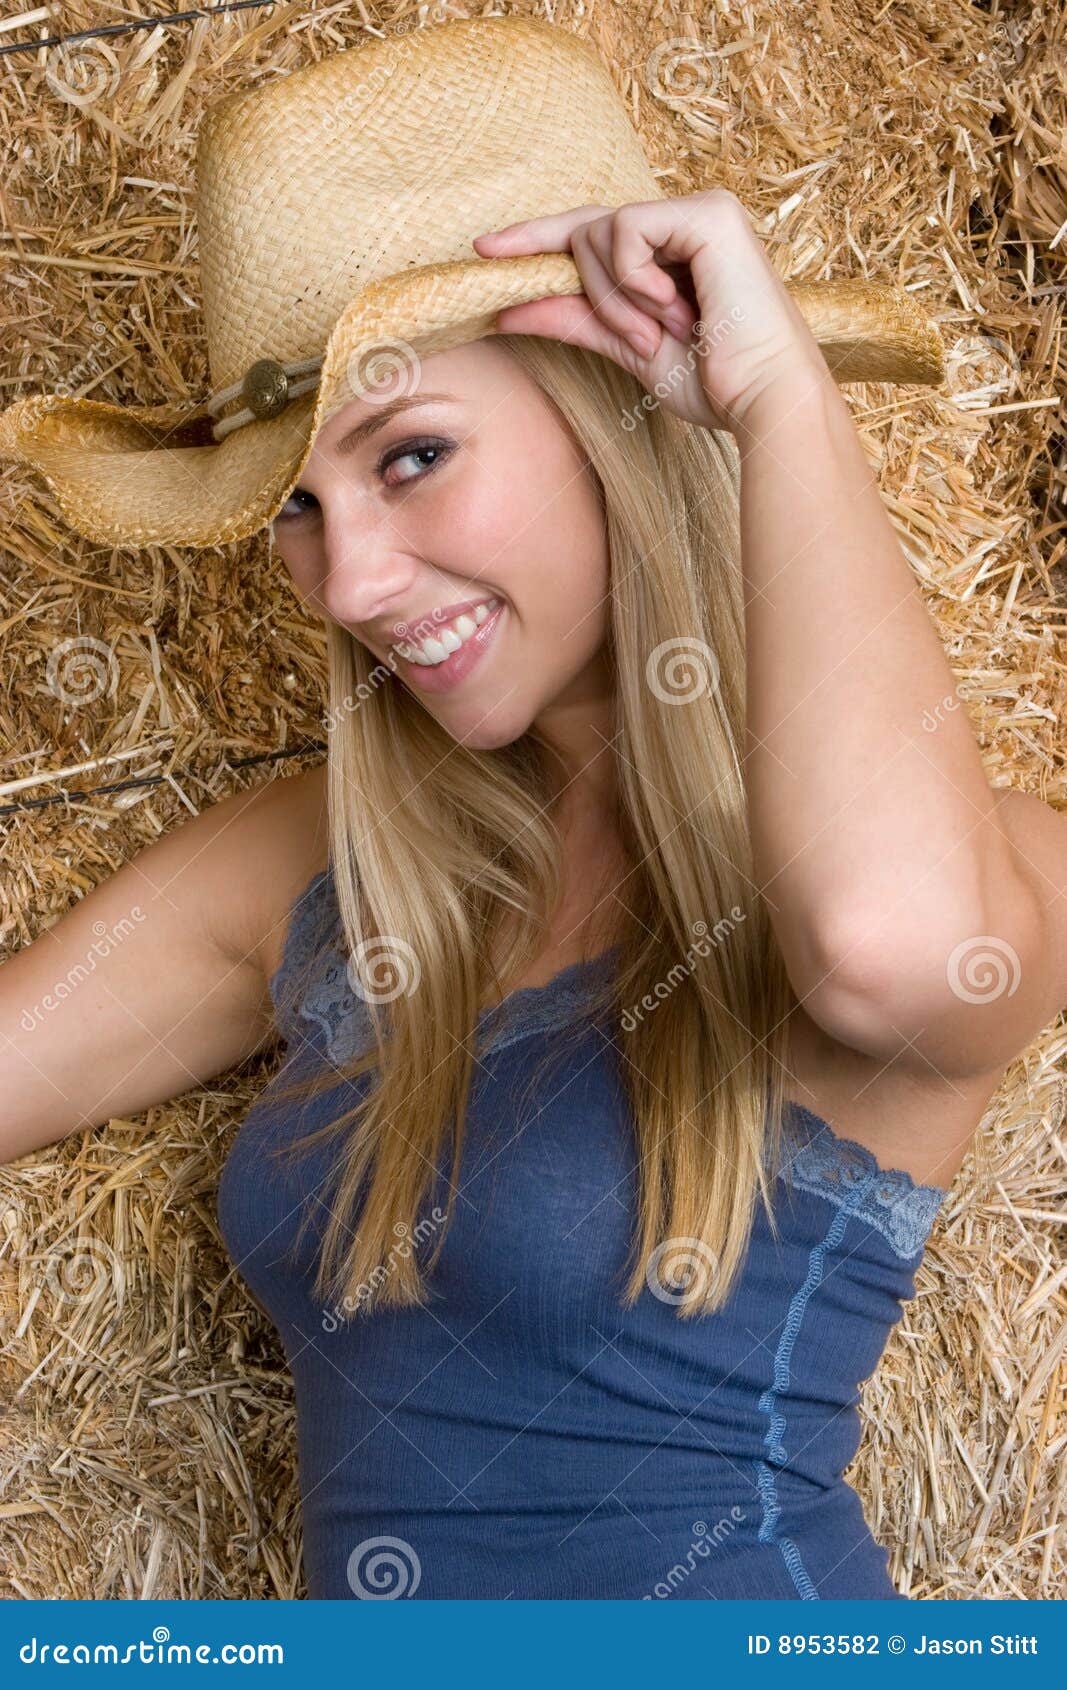 amateur teen cowgirl pov